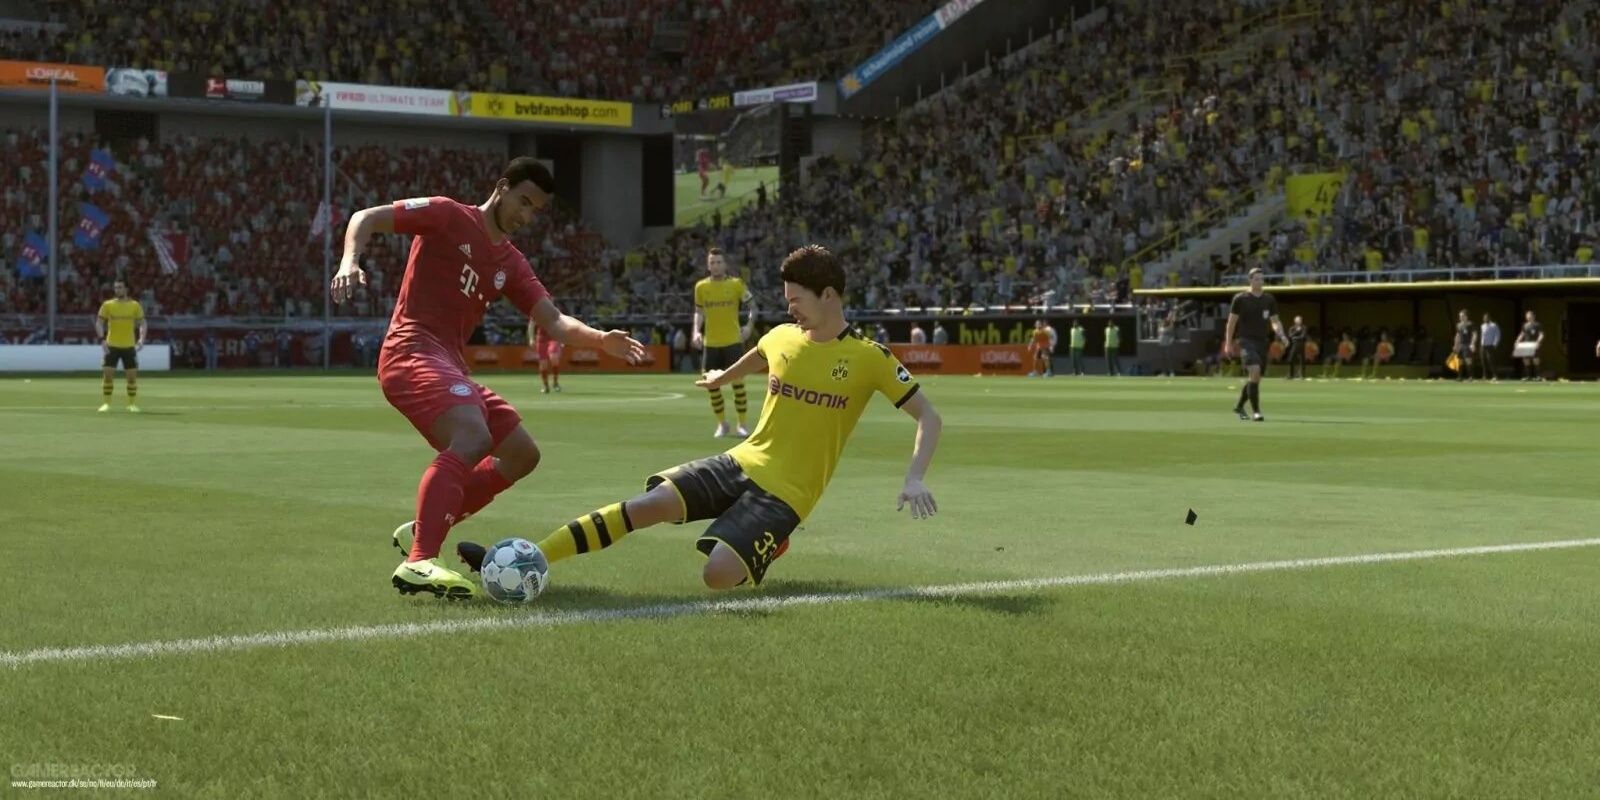 Intercepting the ball in FIFA 22